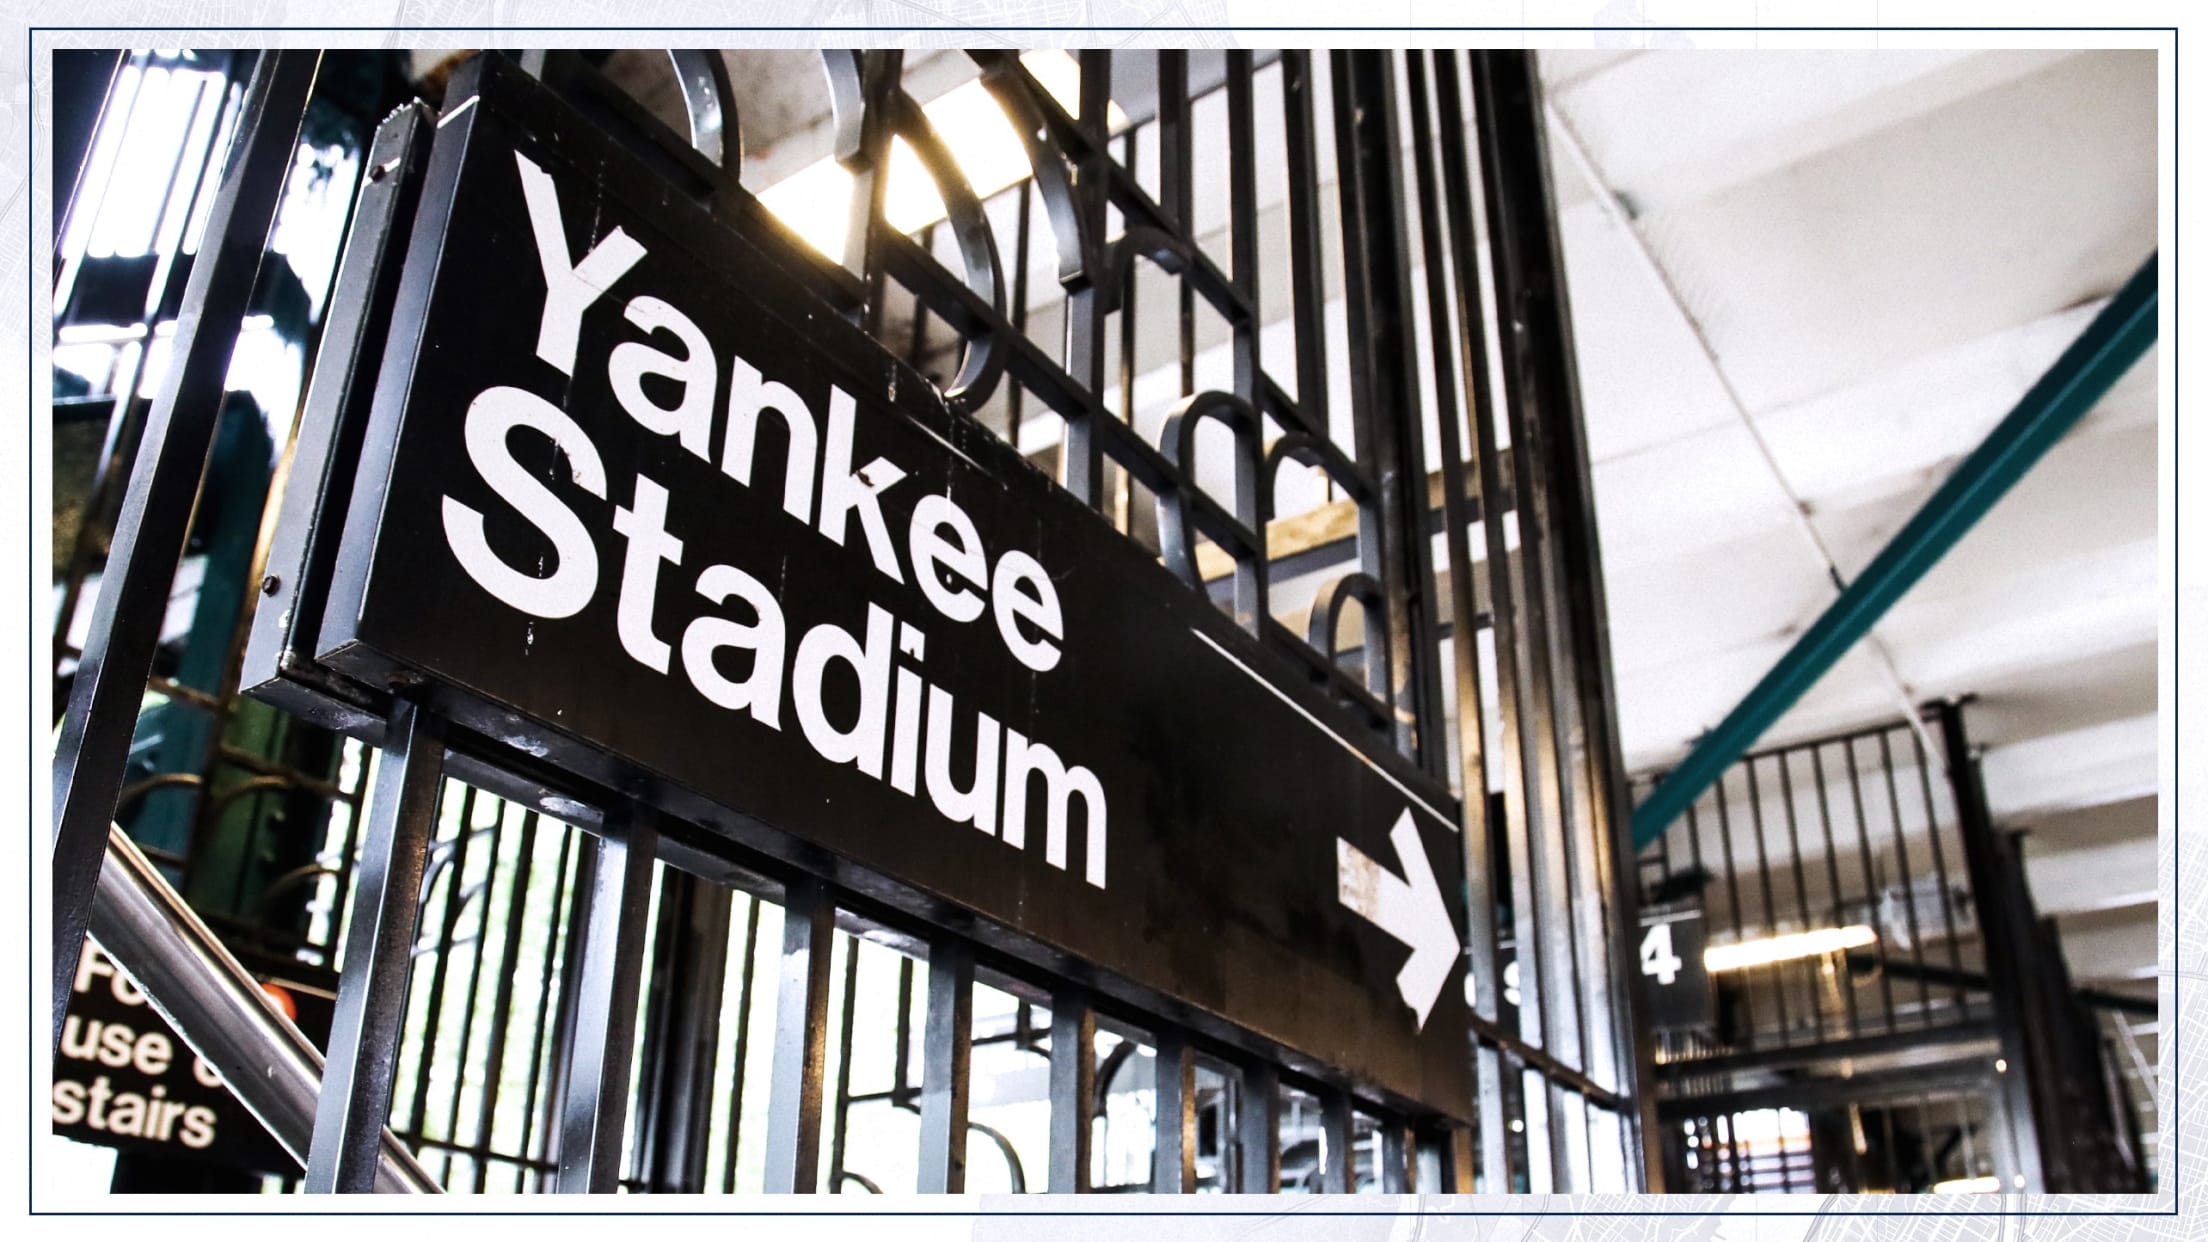 Yankees Museum, Yankee Stadium, 161st Street and River Avenue, The Bronx